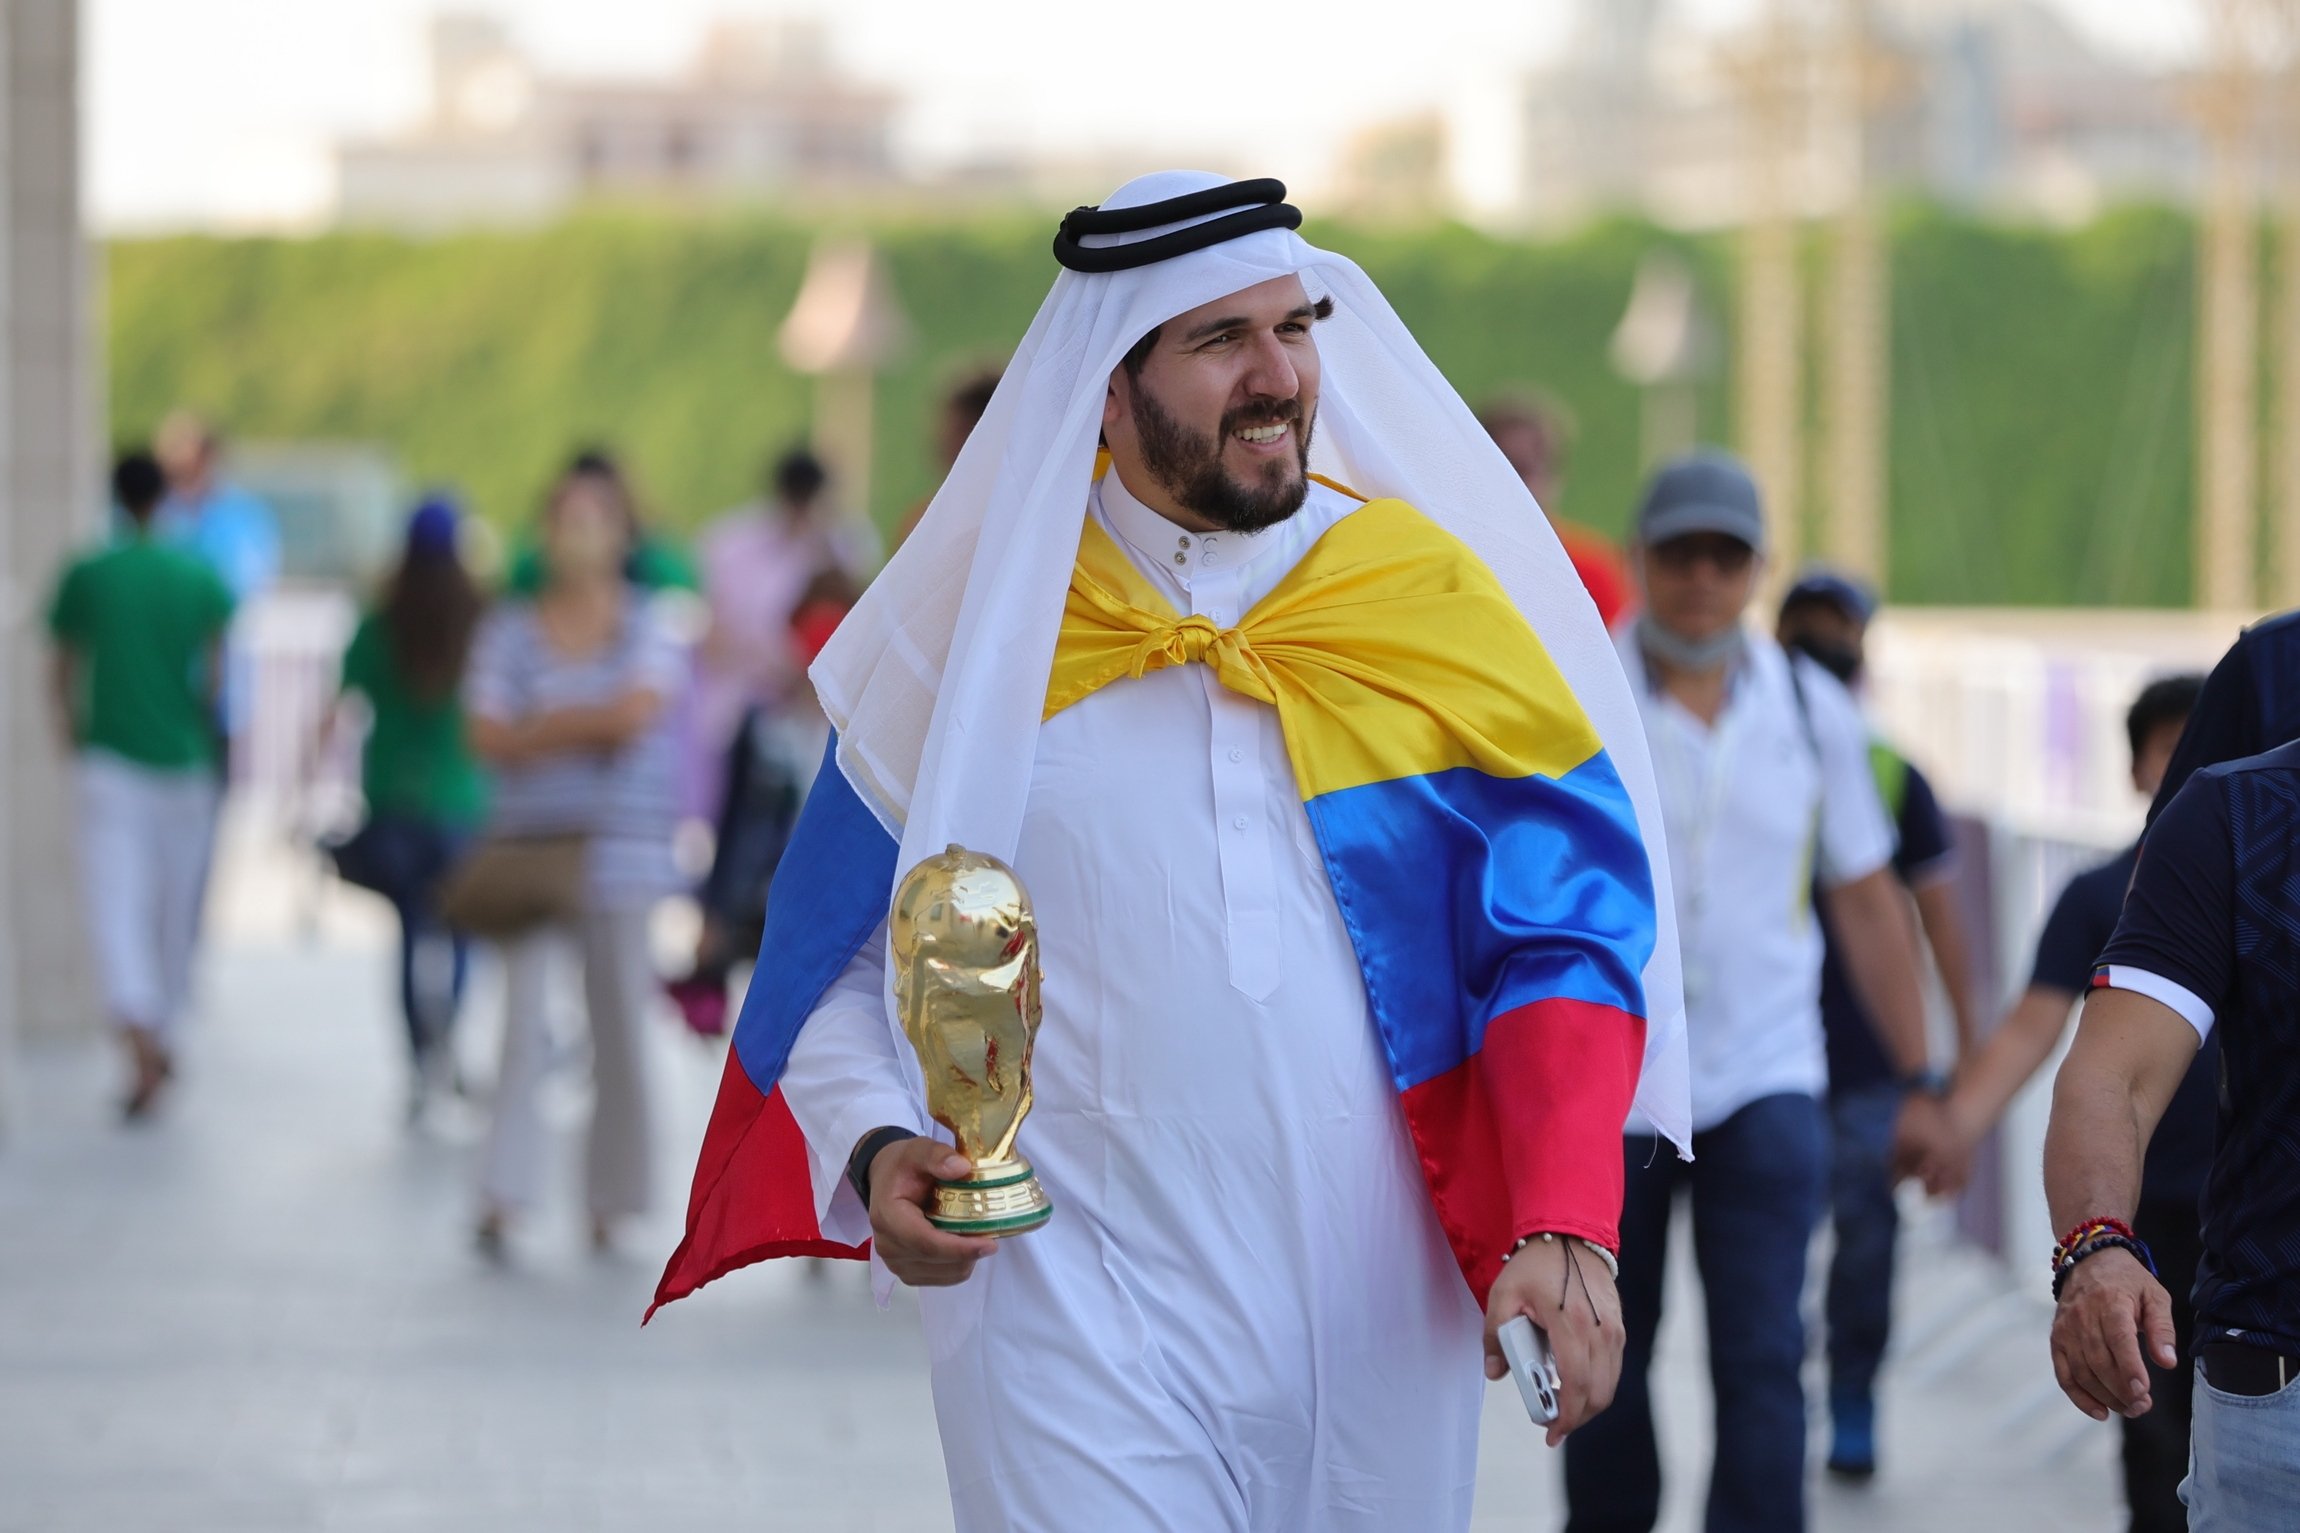 World Cups24 - Qatar World Cup 2022 - Worldwide known fashion